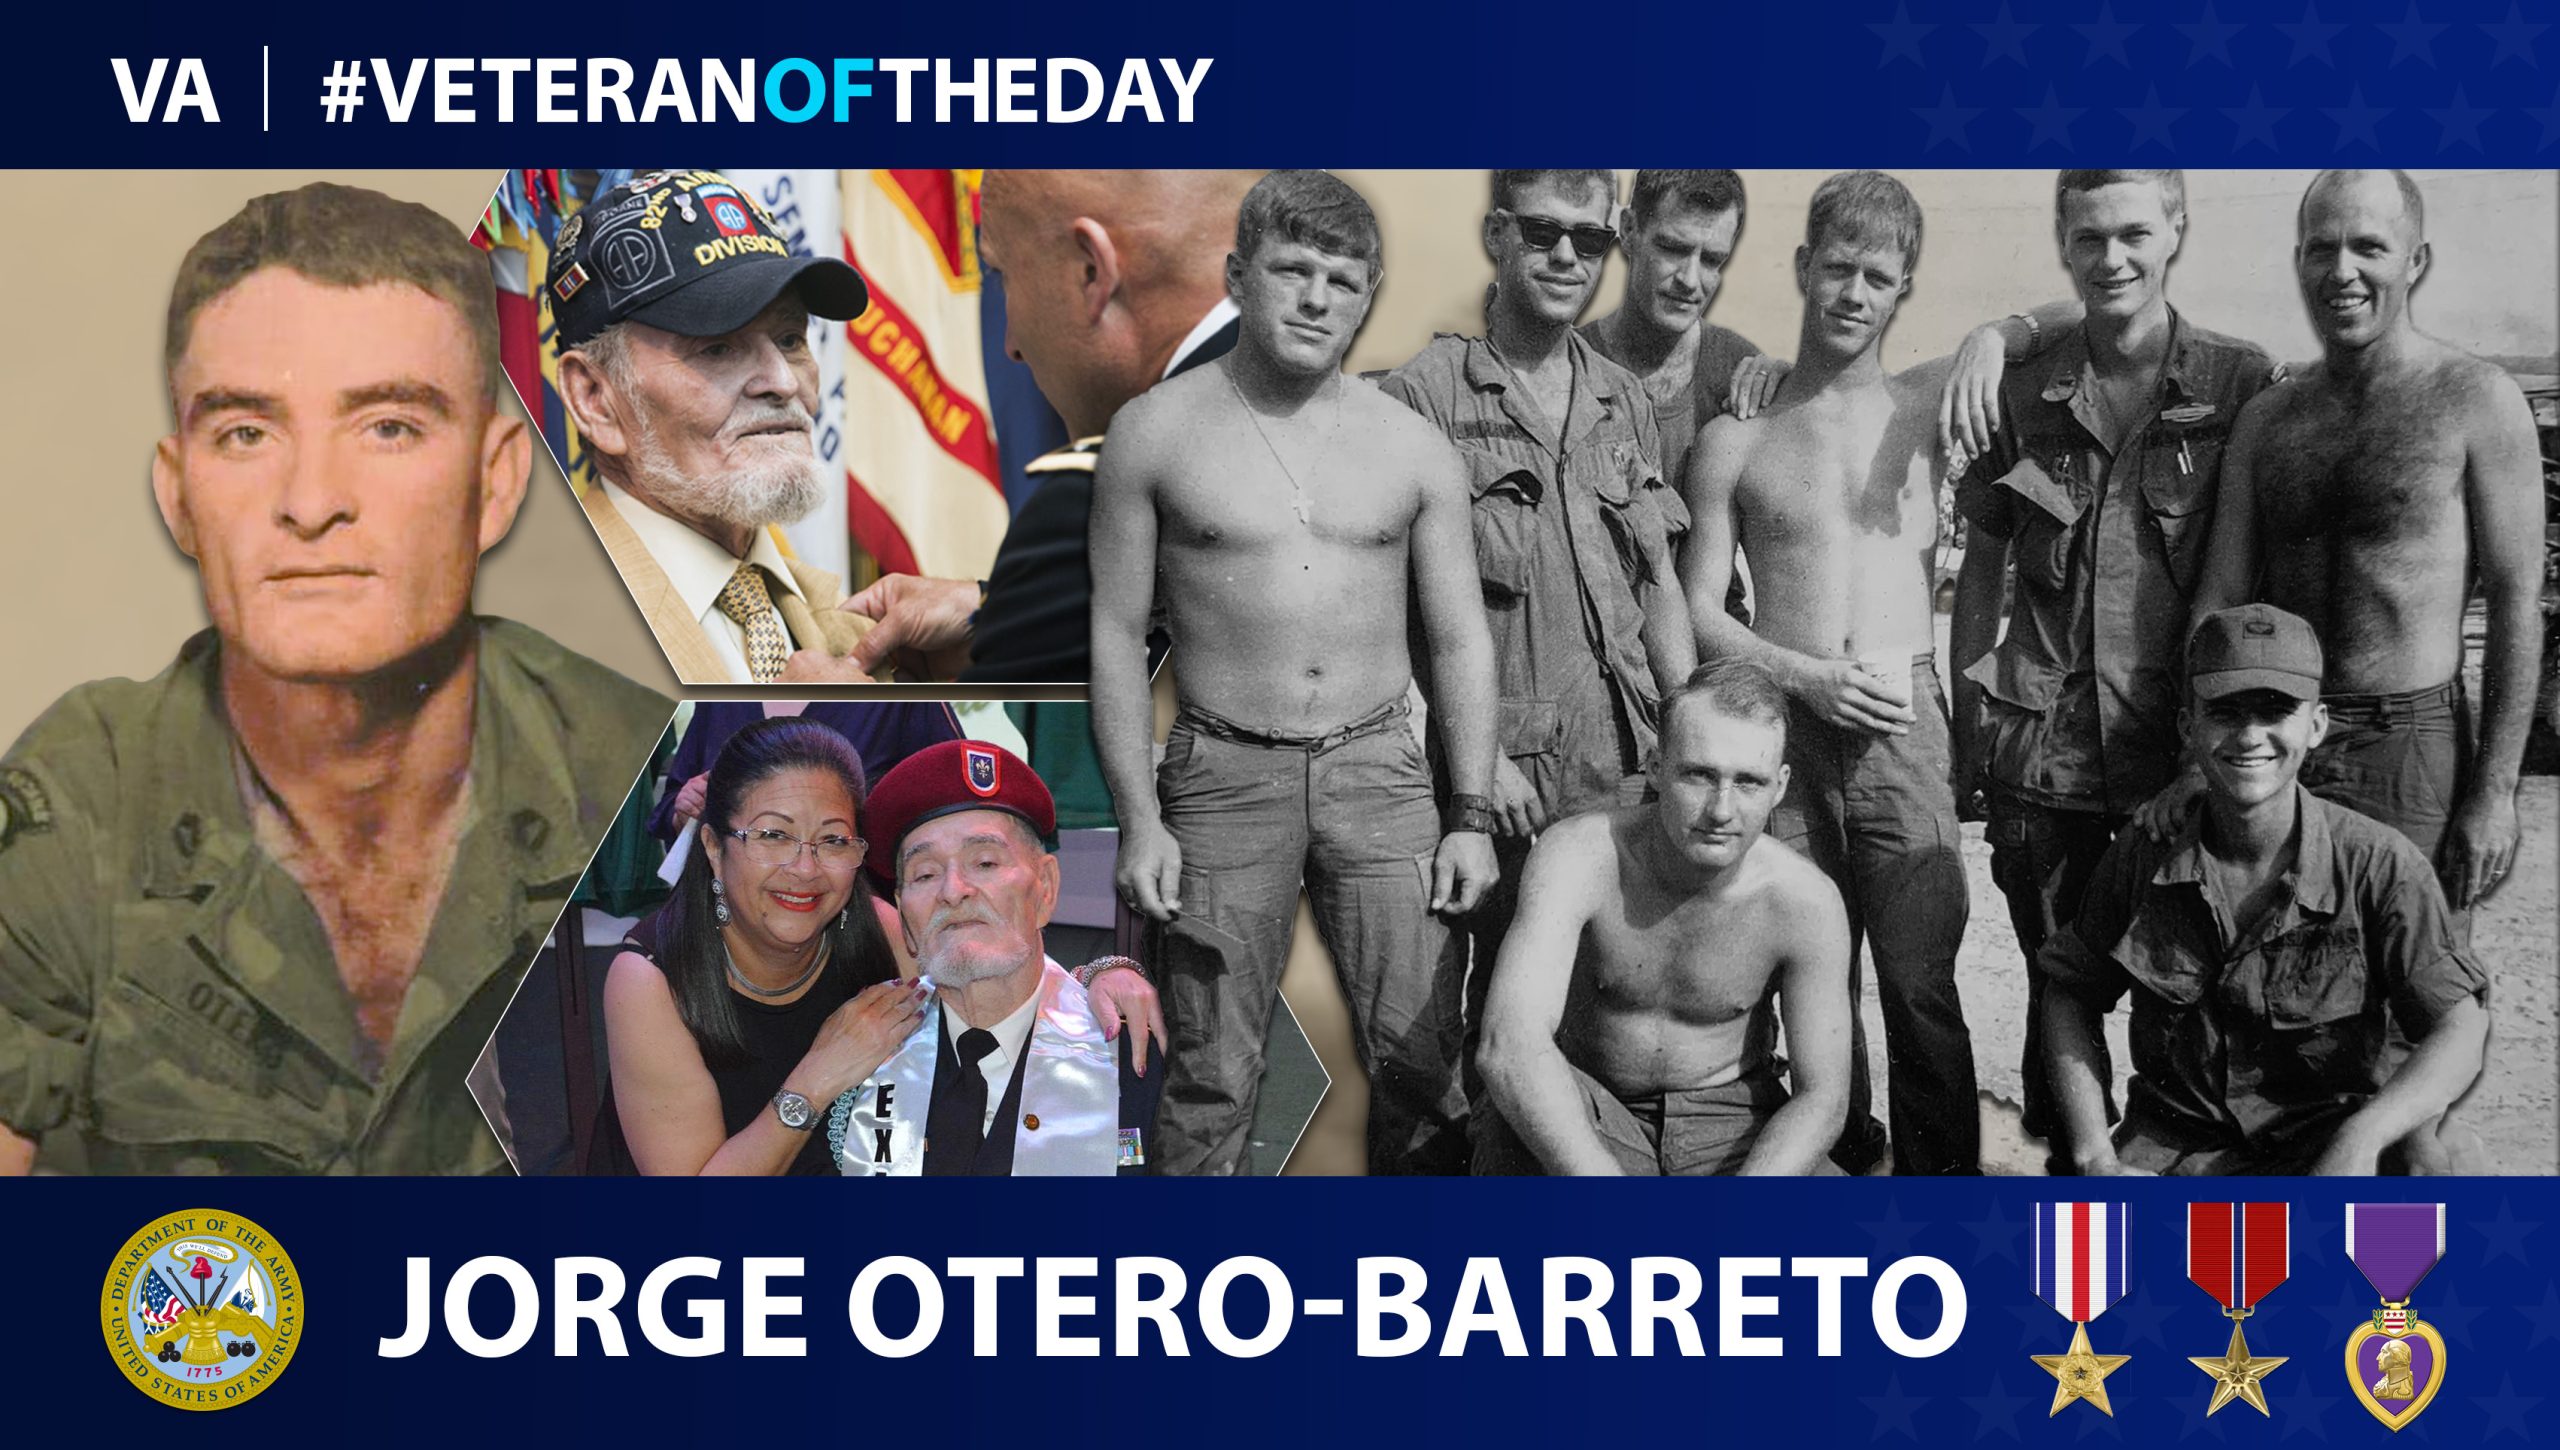 Army Veteran Jorge Otero-Barreto is today’s Veteran of the Day.